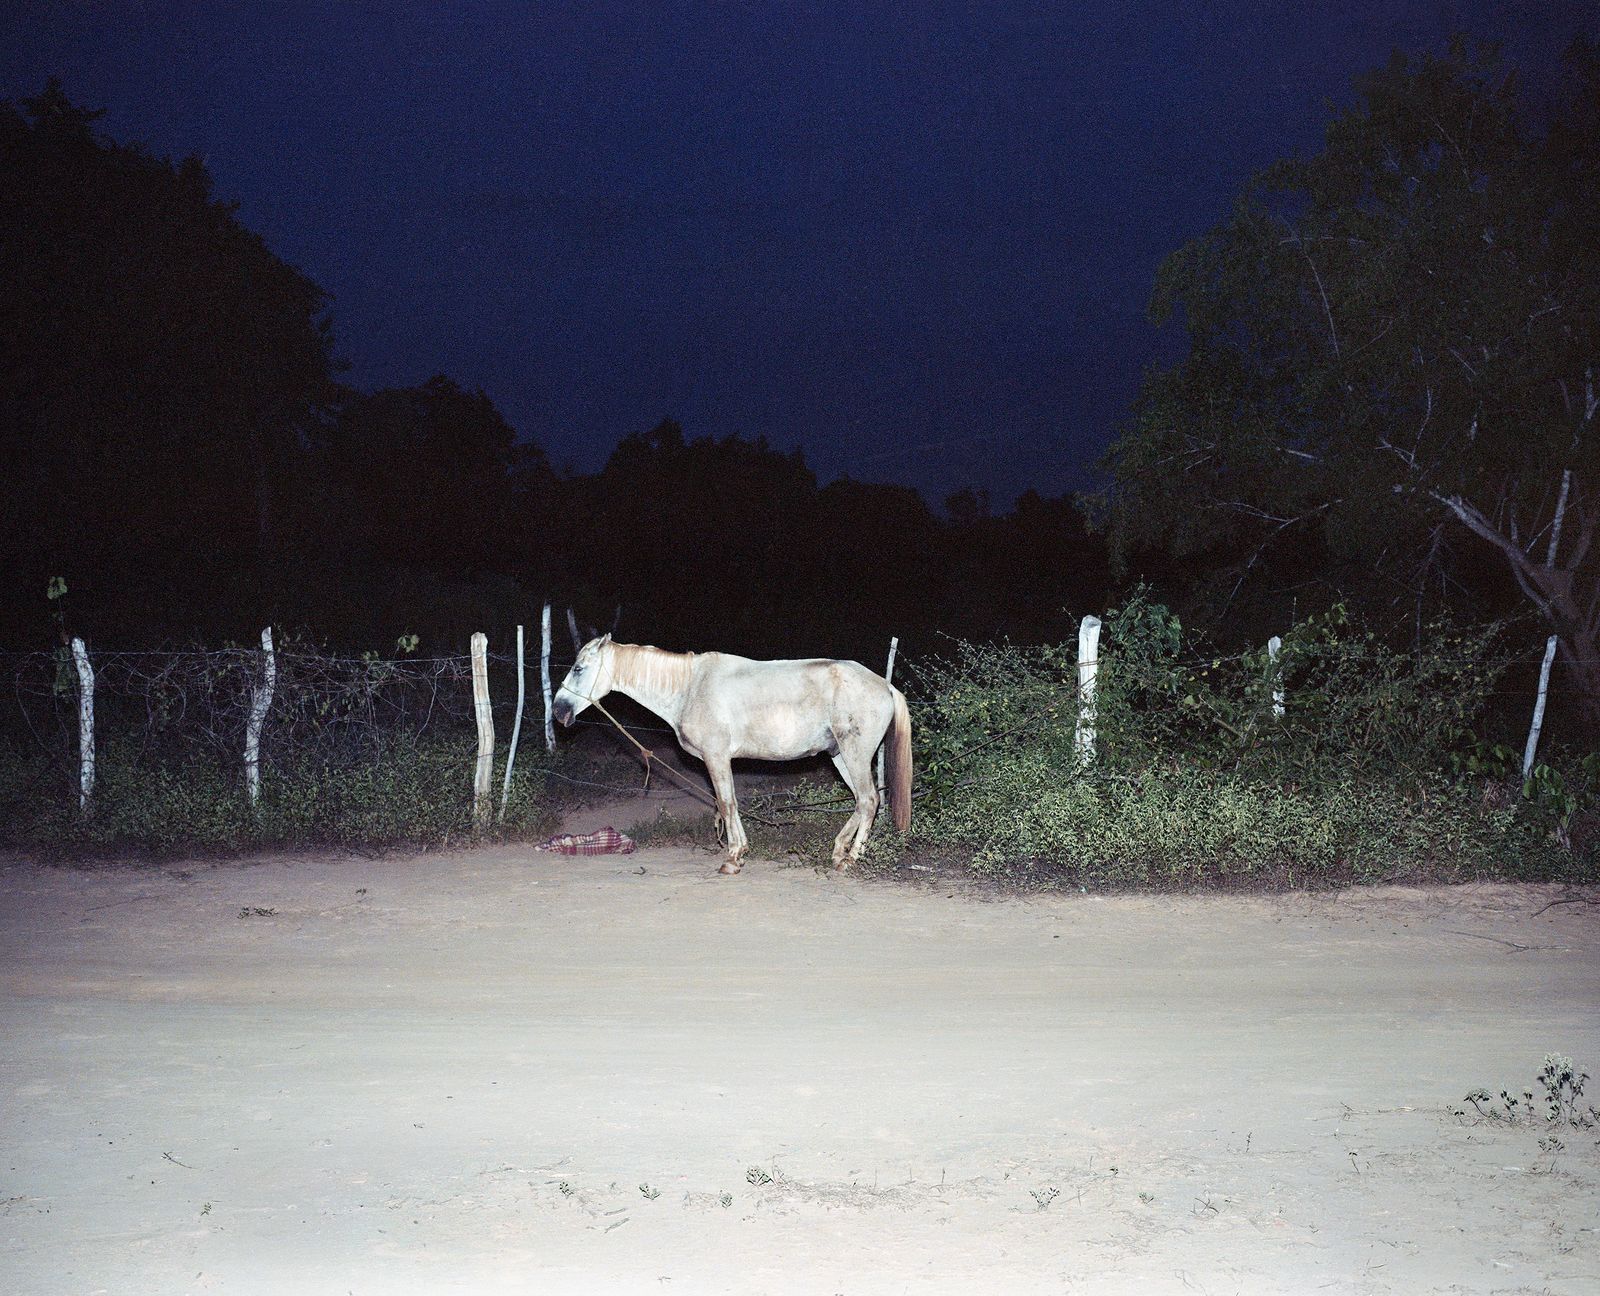 © Tommaso Rada - Januaria, Minas Gerais. A horse breeds inside the Quilombo.